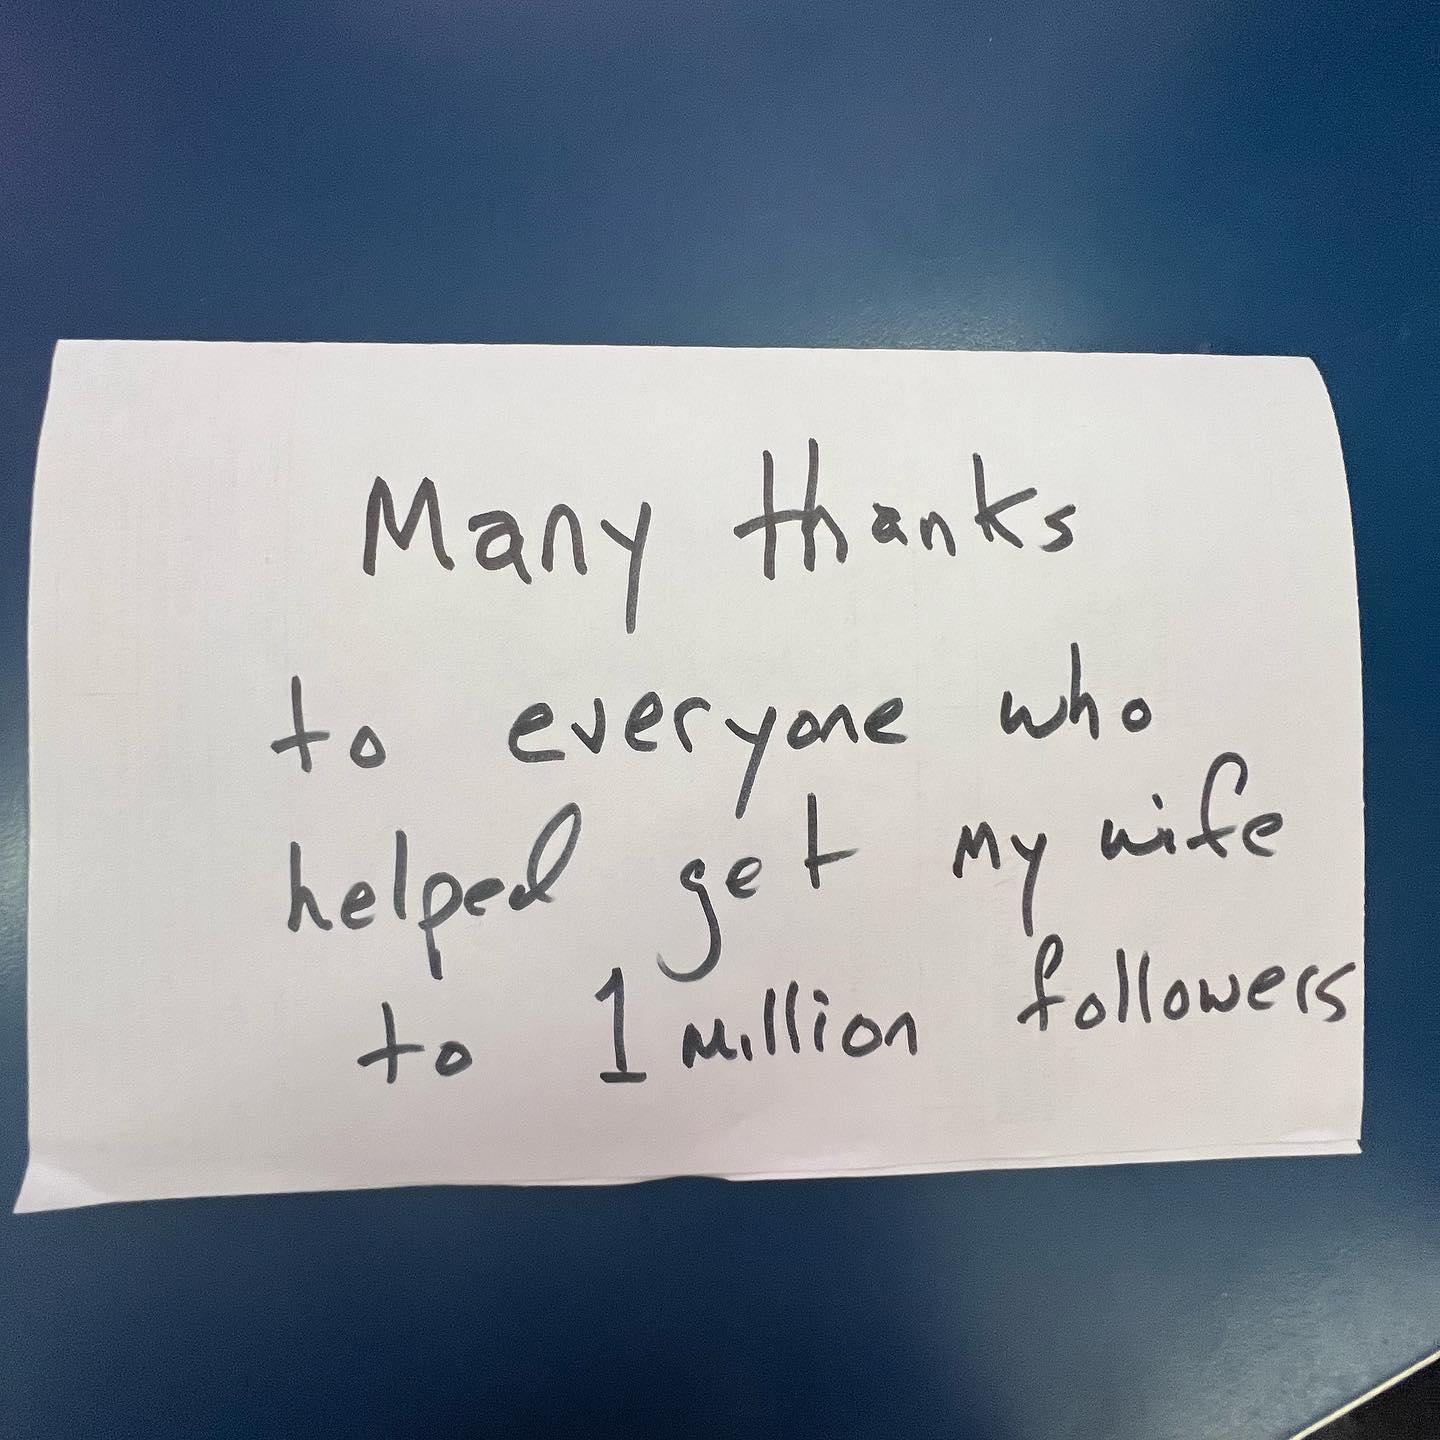 Alec Baldwin thanks fans for getting Hilaria Baldwin's account to 1 million followers